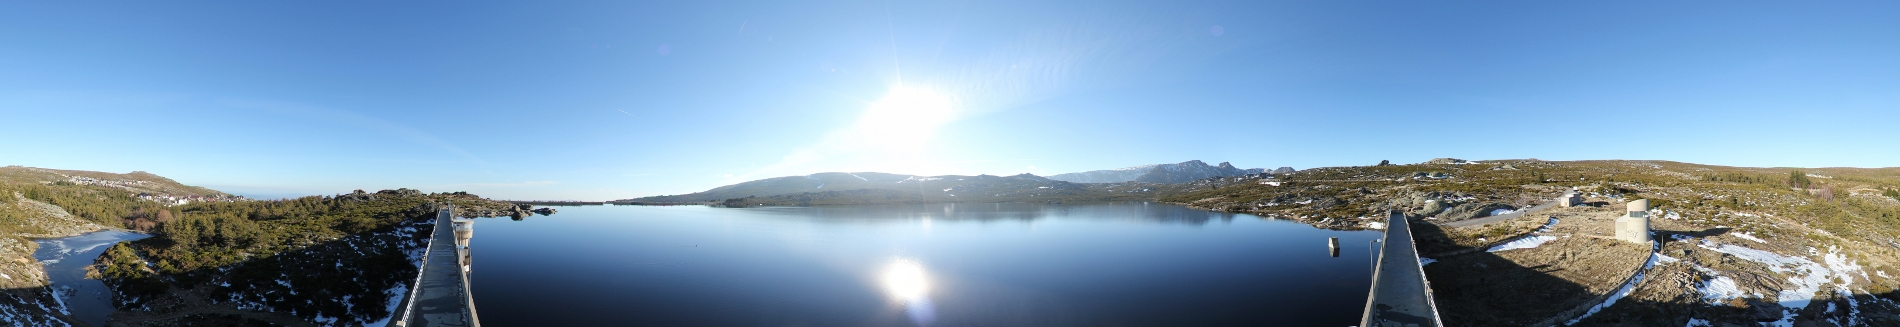 Barragem do Lago Viriato 